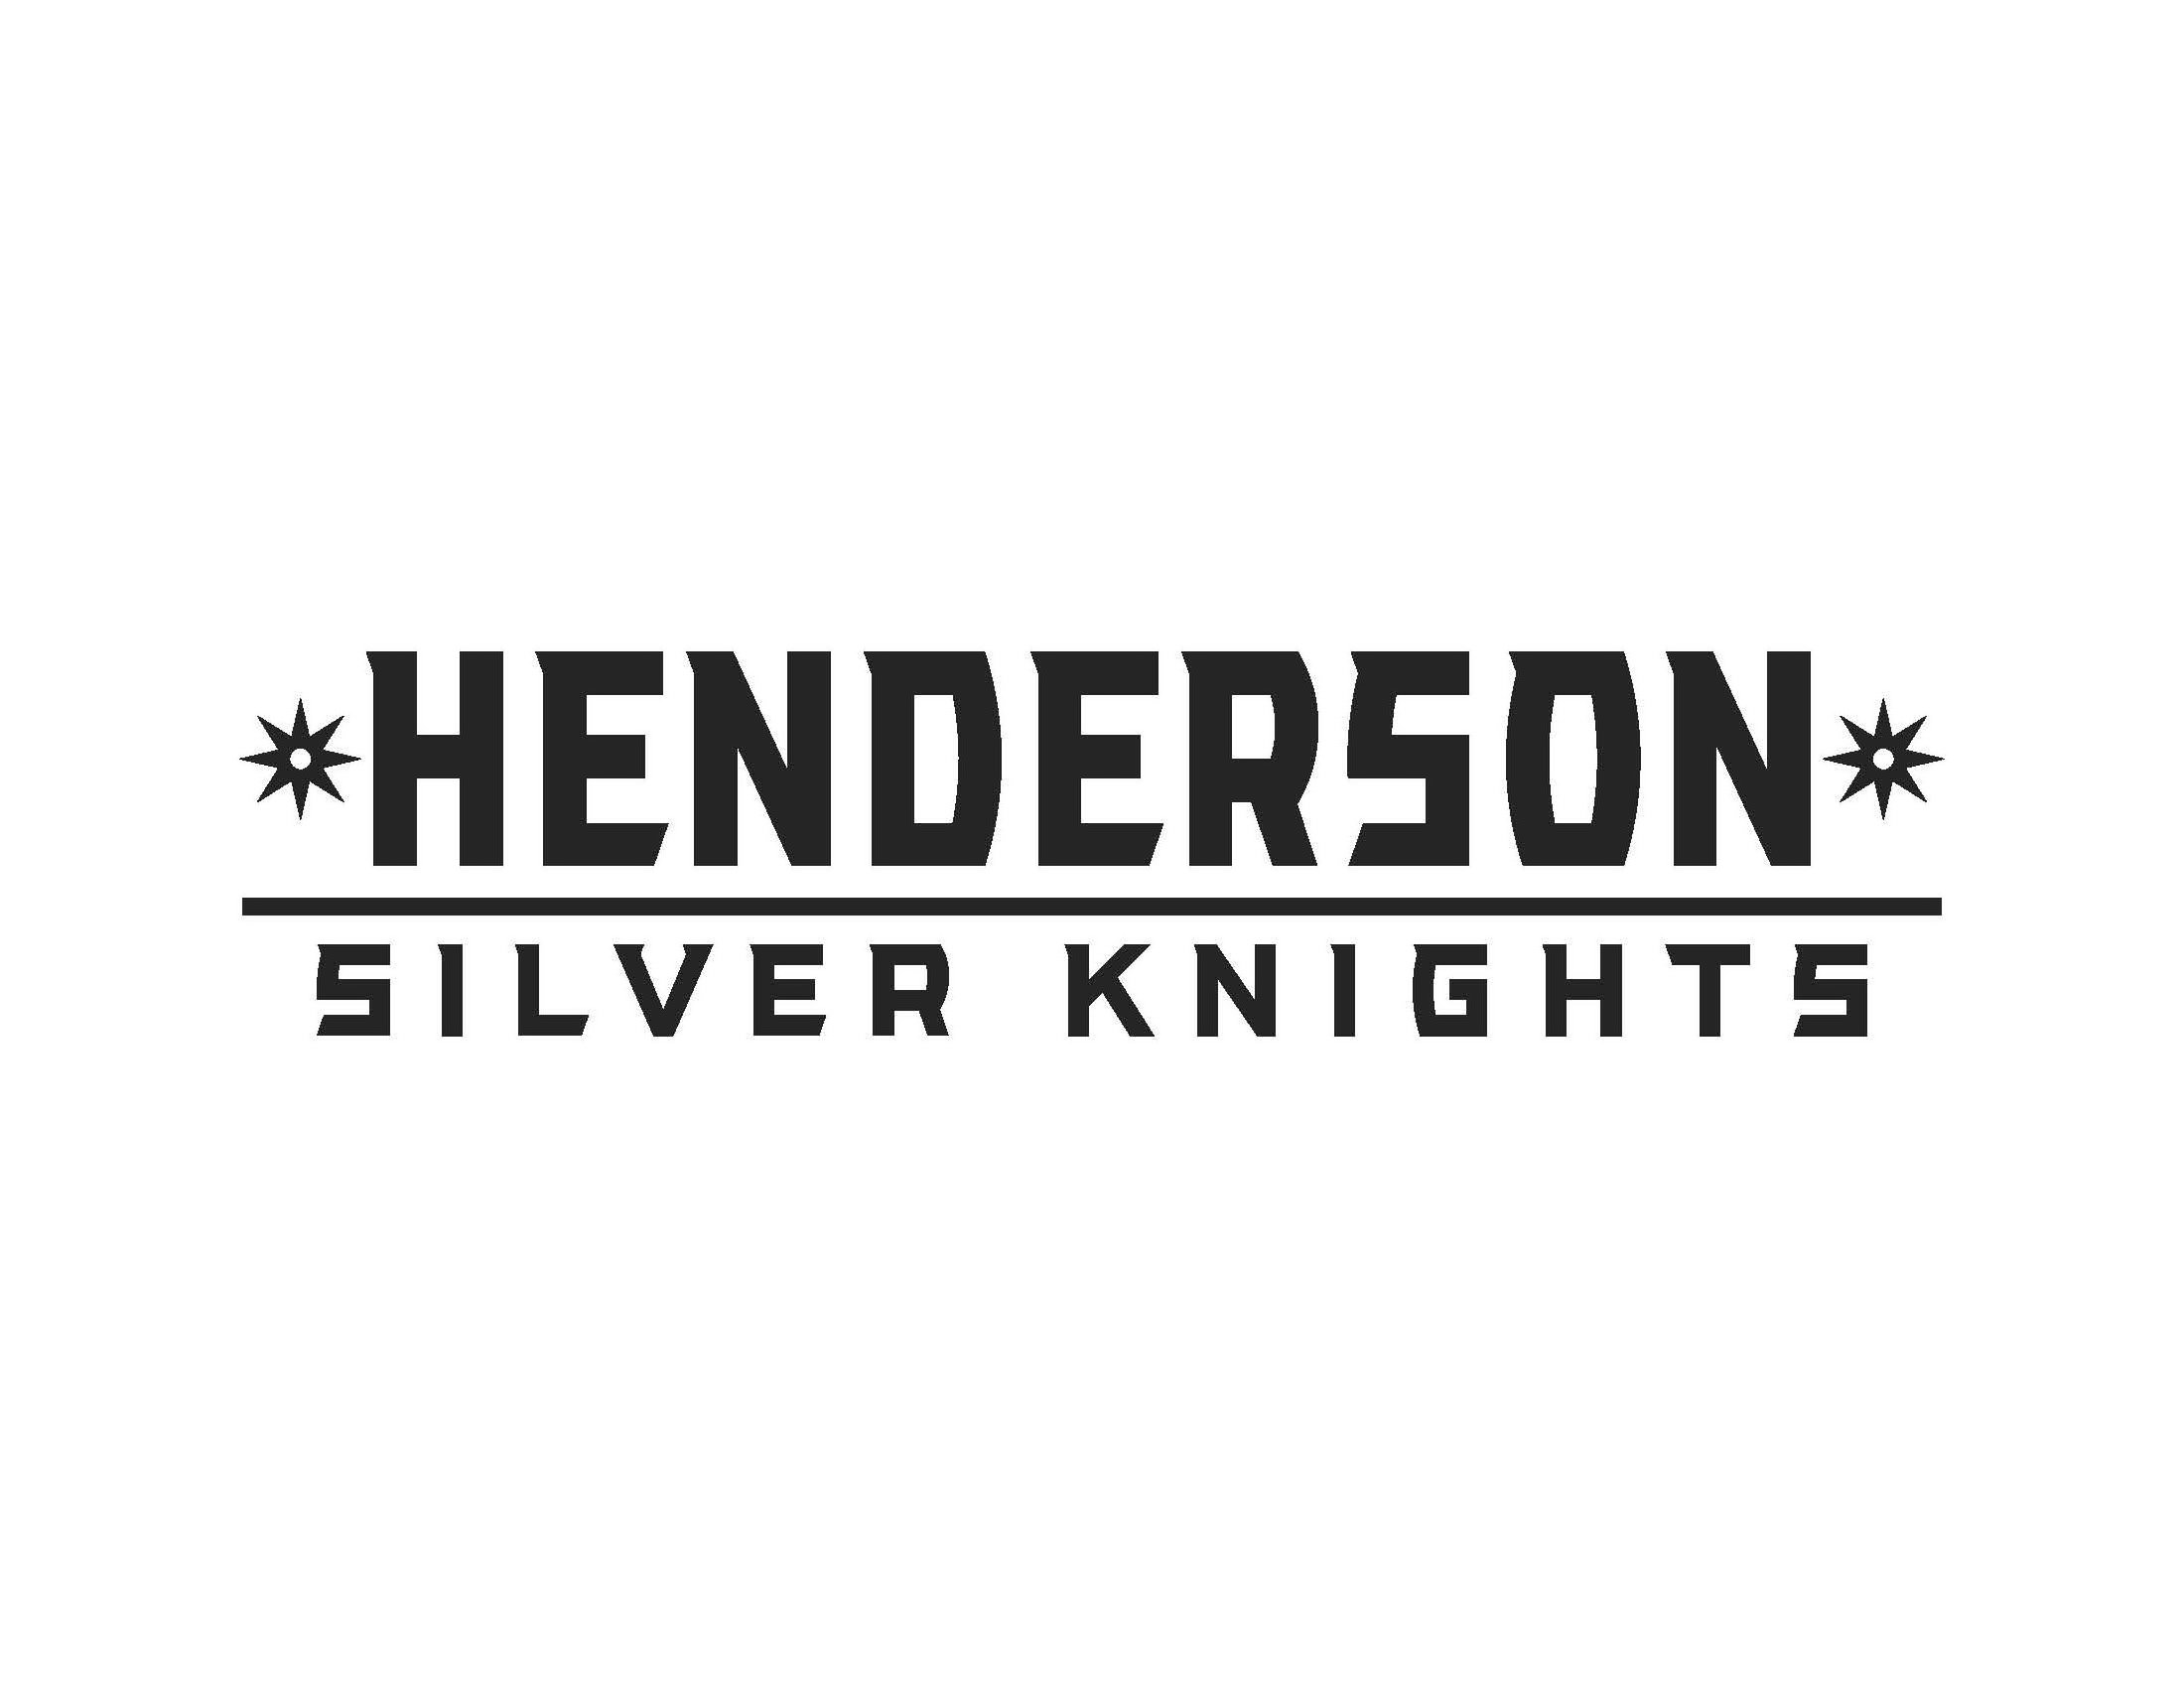 HENDERSON SILVER KNIGHTS